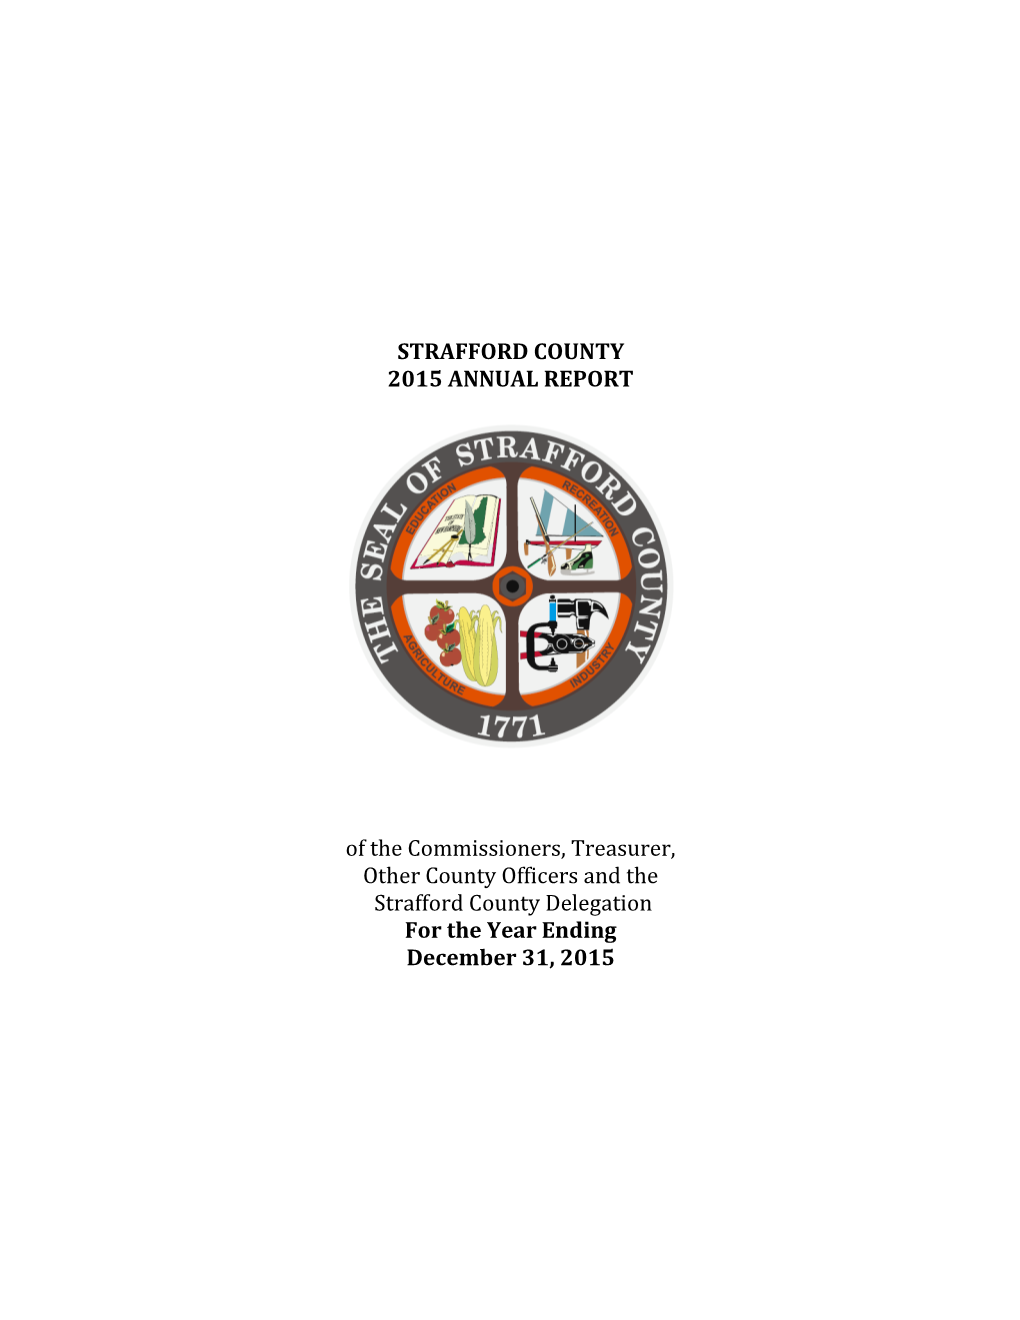 Strafford County Commissioner's 2015 Annual Report